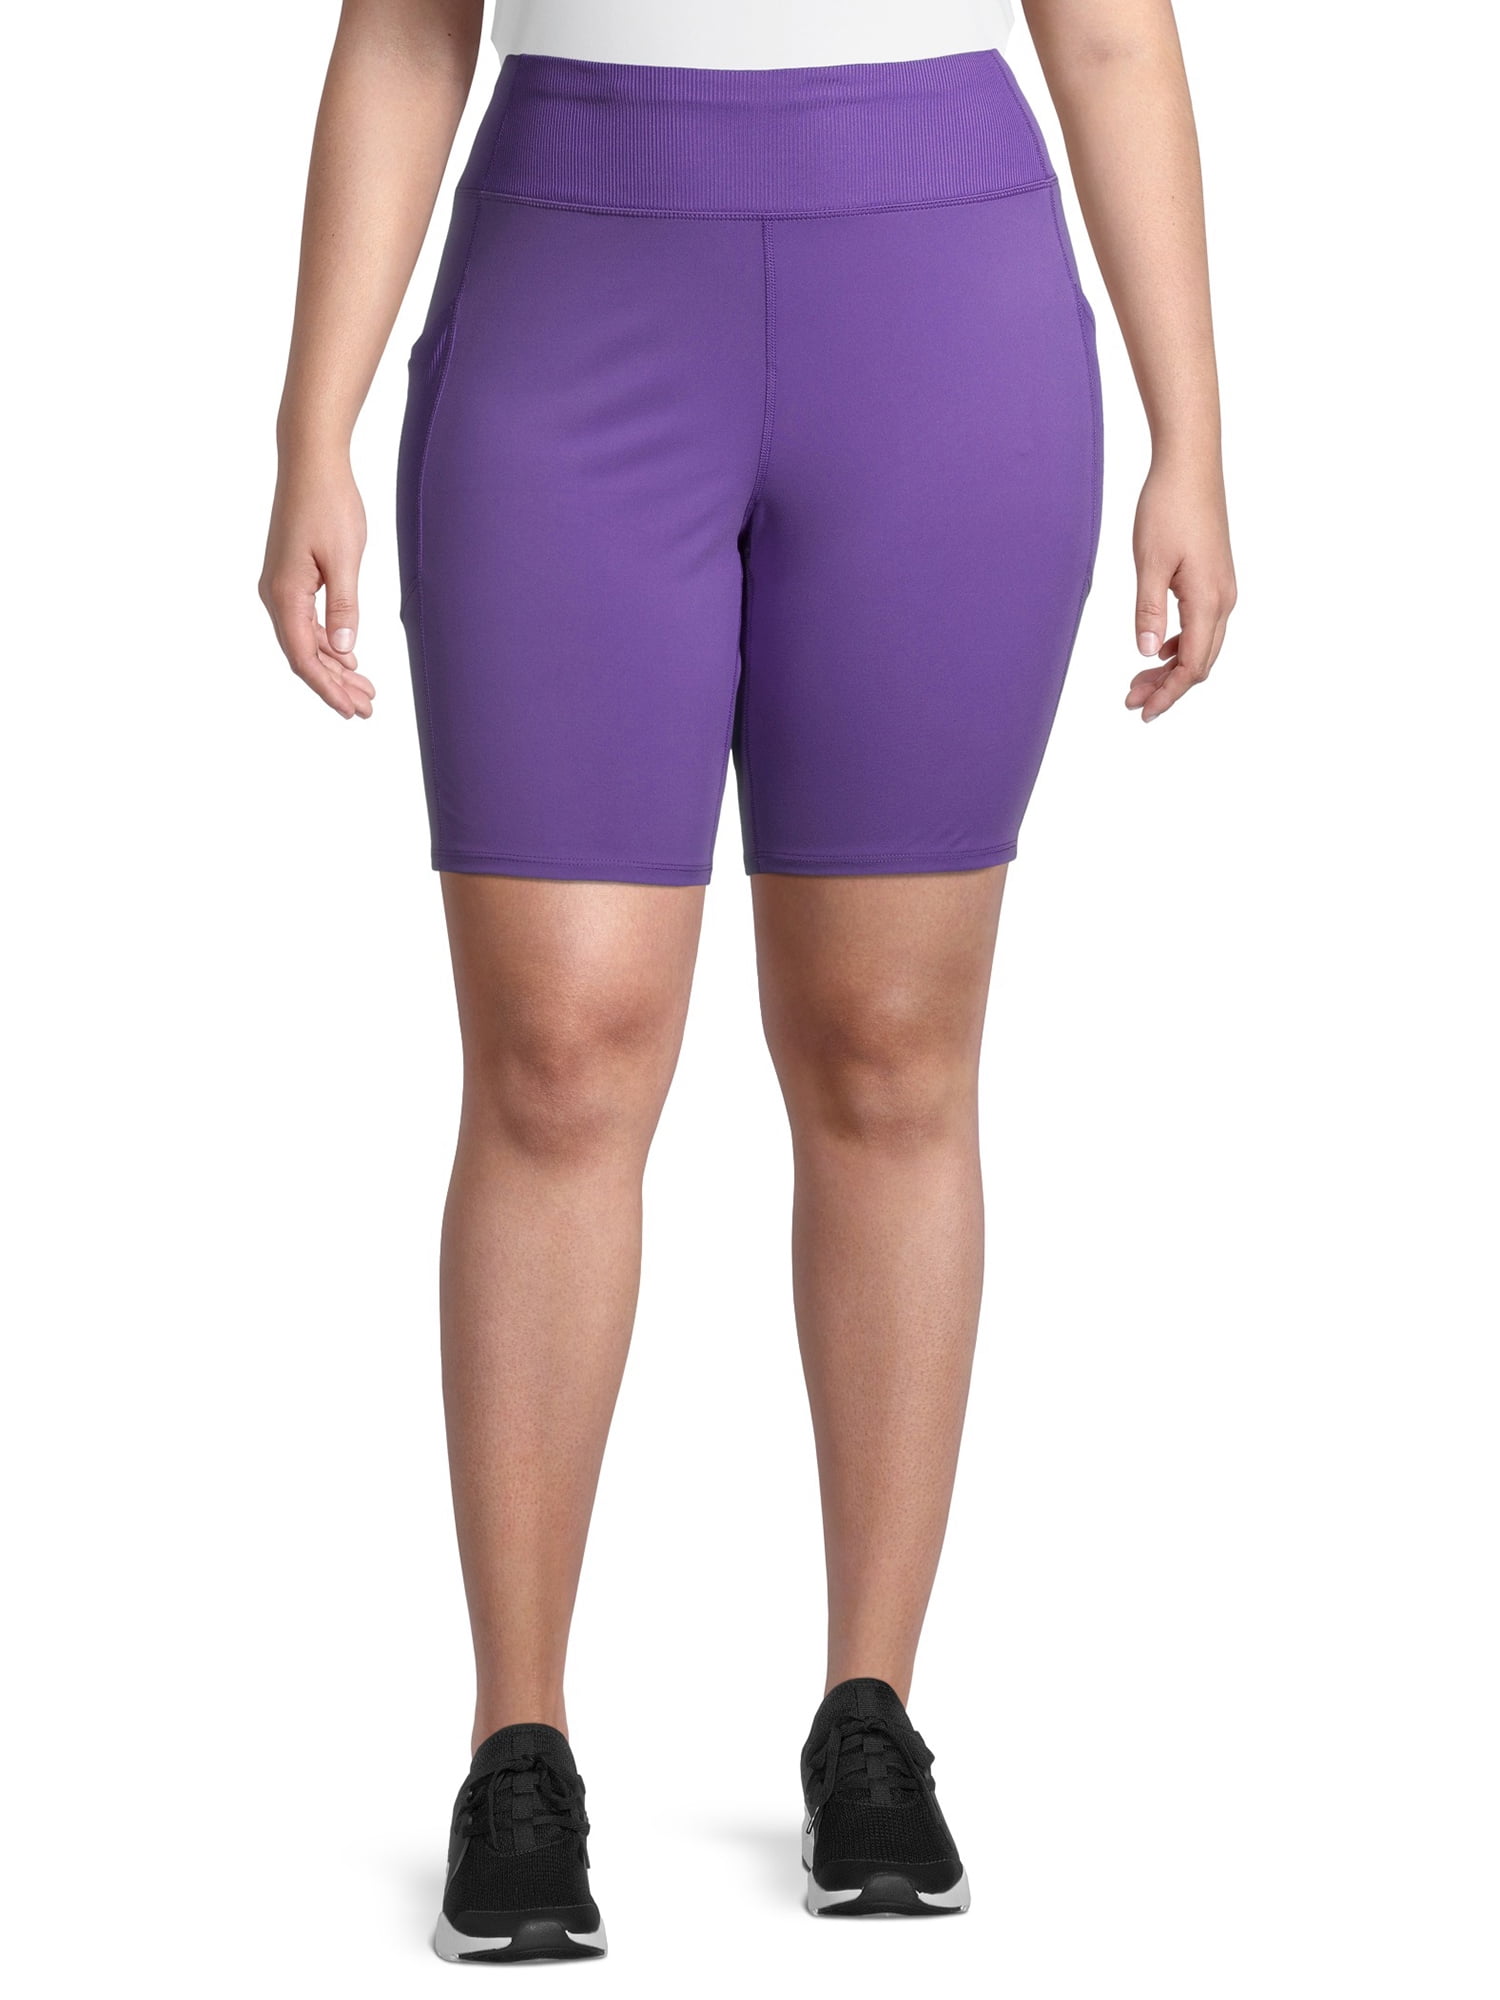 Cotton Spandex Bike Shorts Misses Womens Plus Size Mid Thigh Many Colors S-5XL 